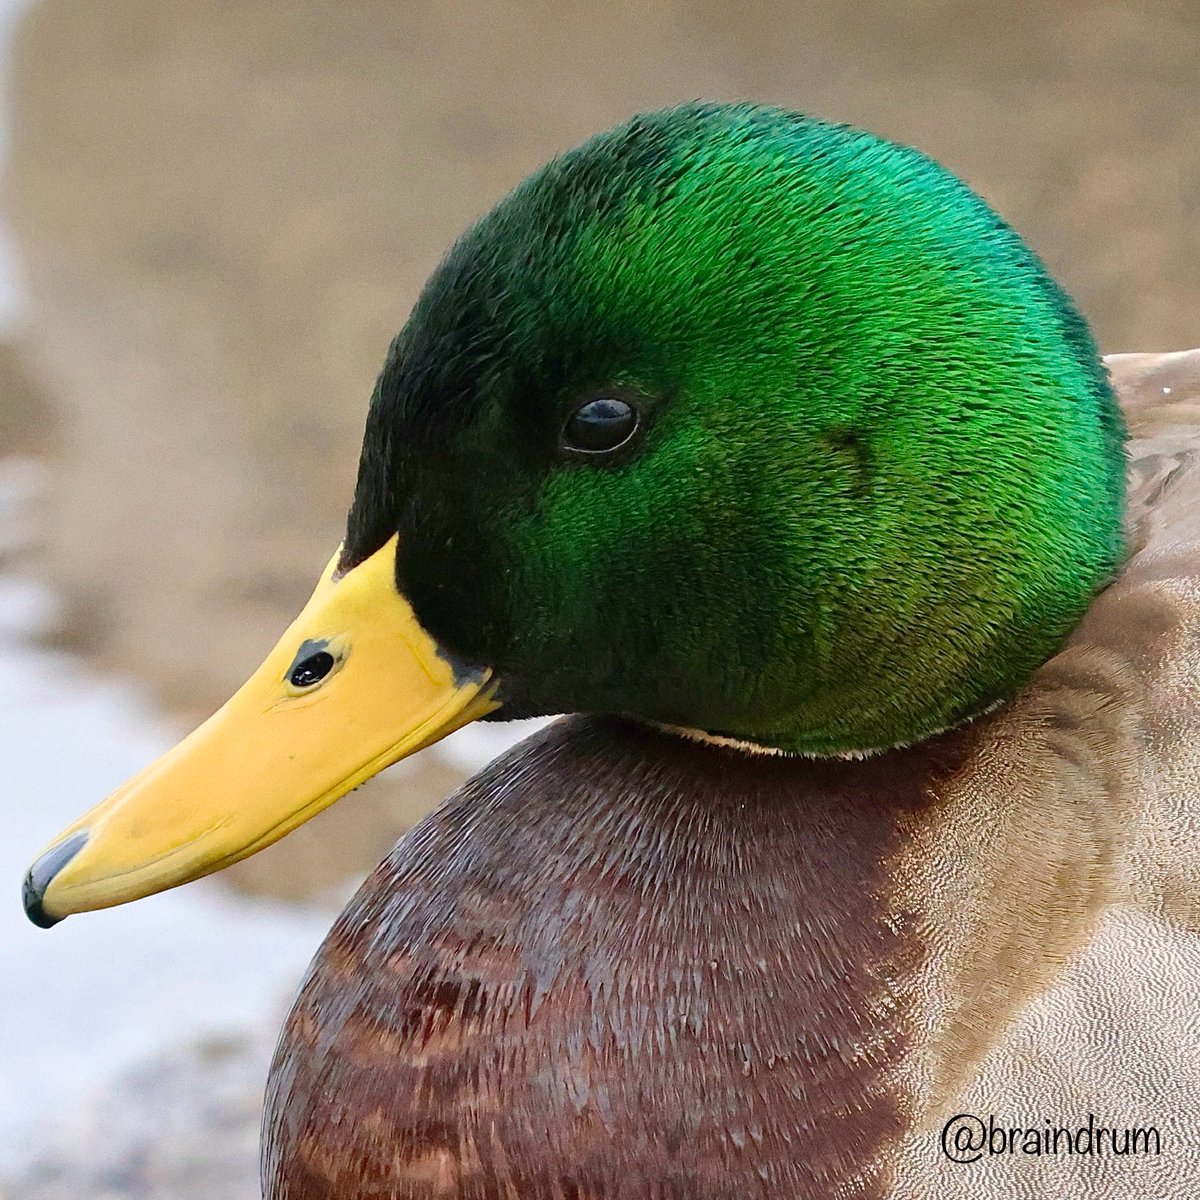 Daddy O’Mallard…the lucky duck 🍀🦆 Happy #StPatricksDay!